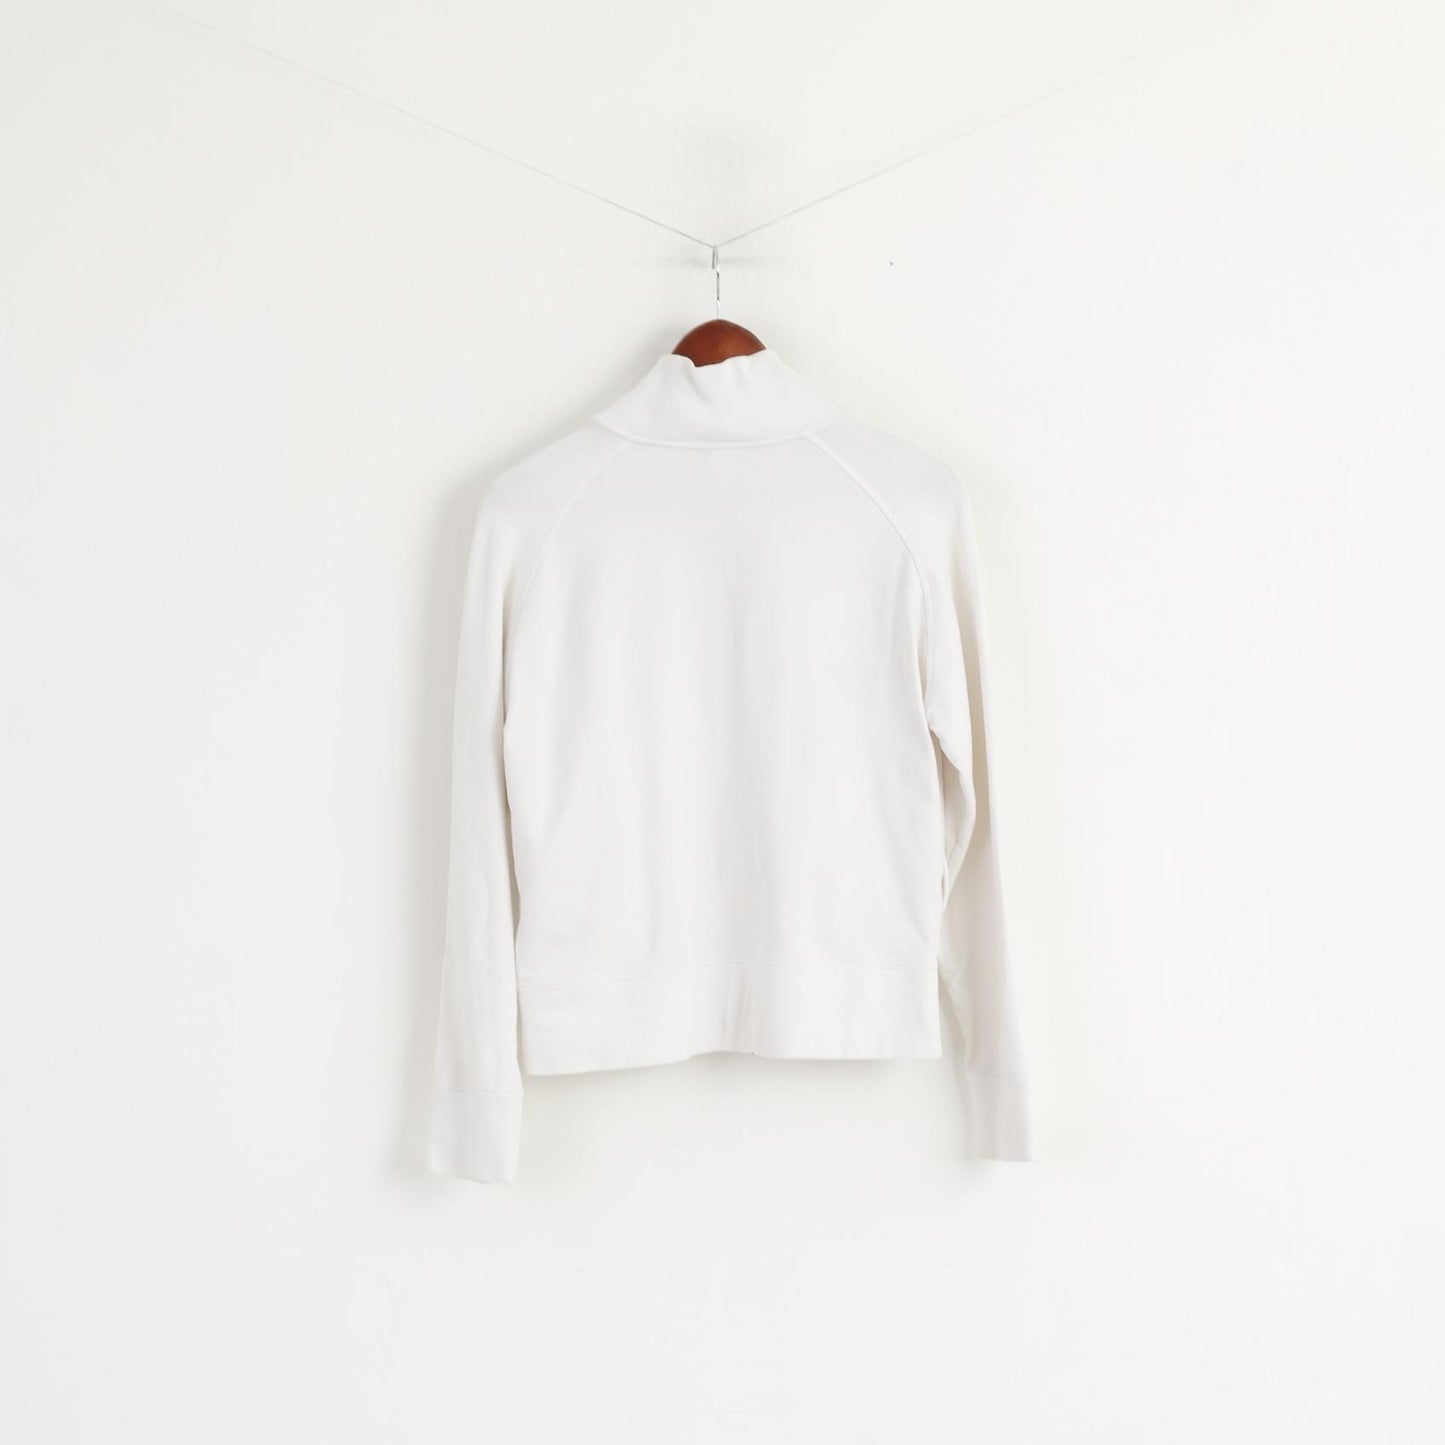 Reebok Women 16 42 L Sweatshirt White Cotton Full Zipper Classic Retro Cropped Top